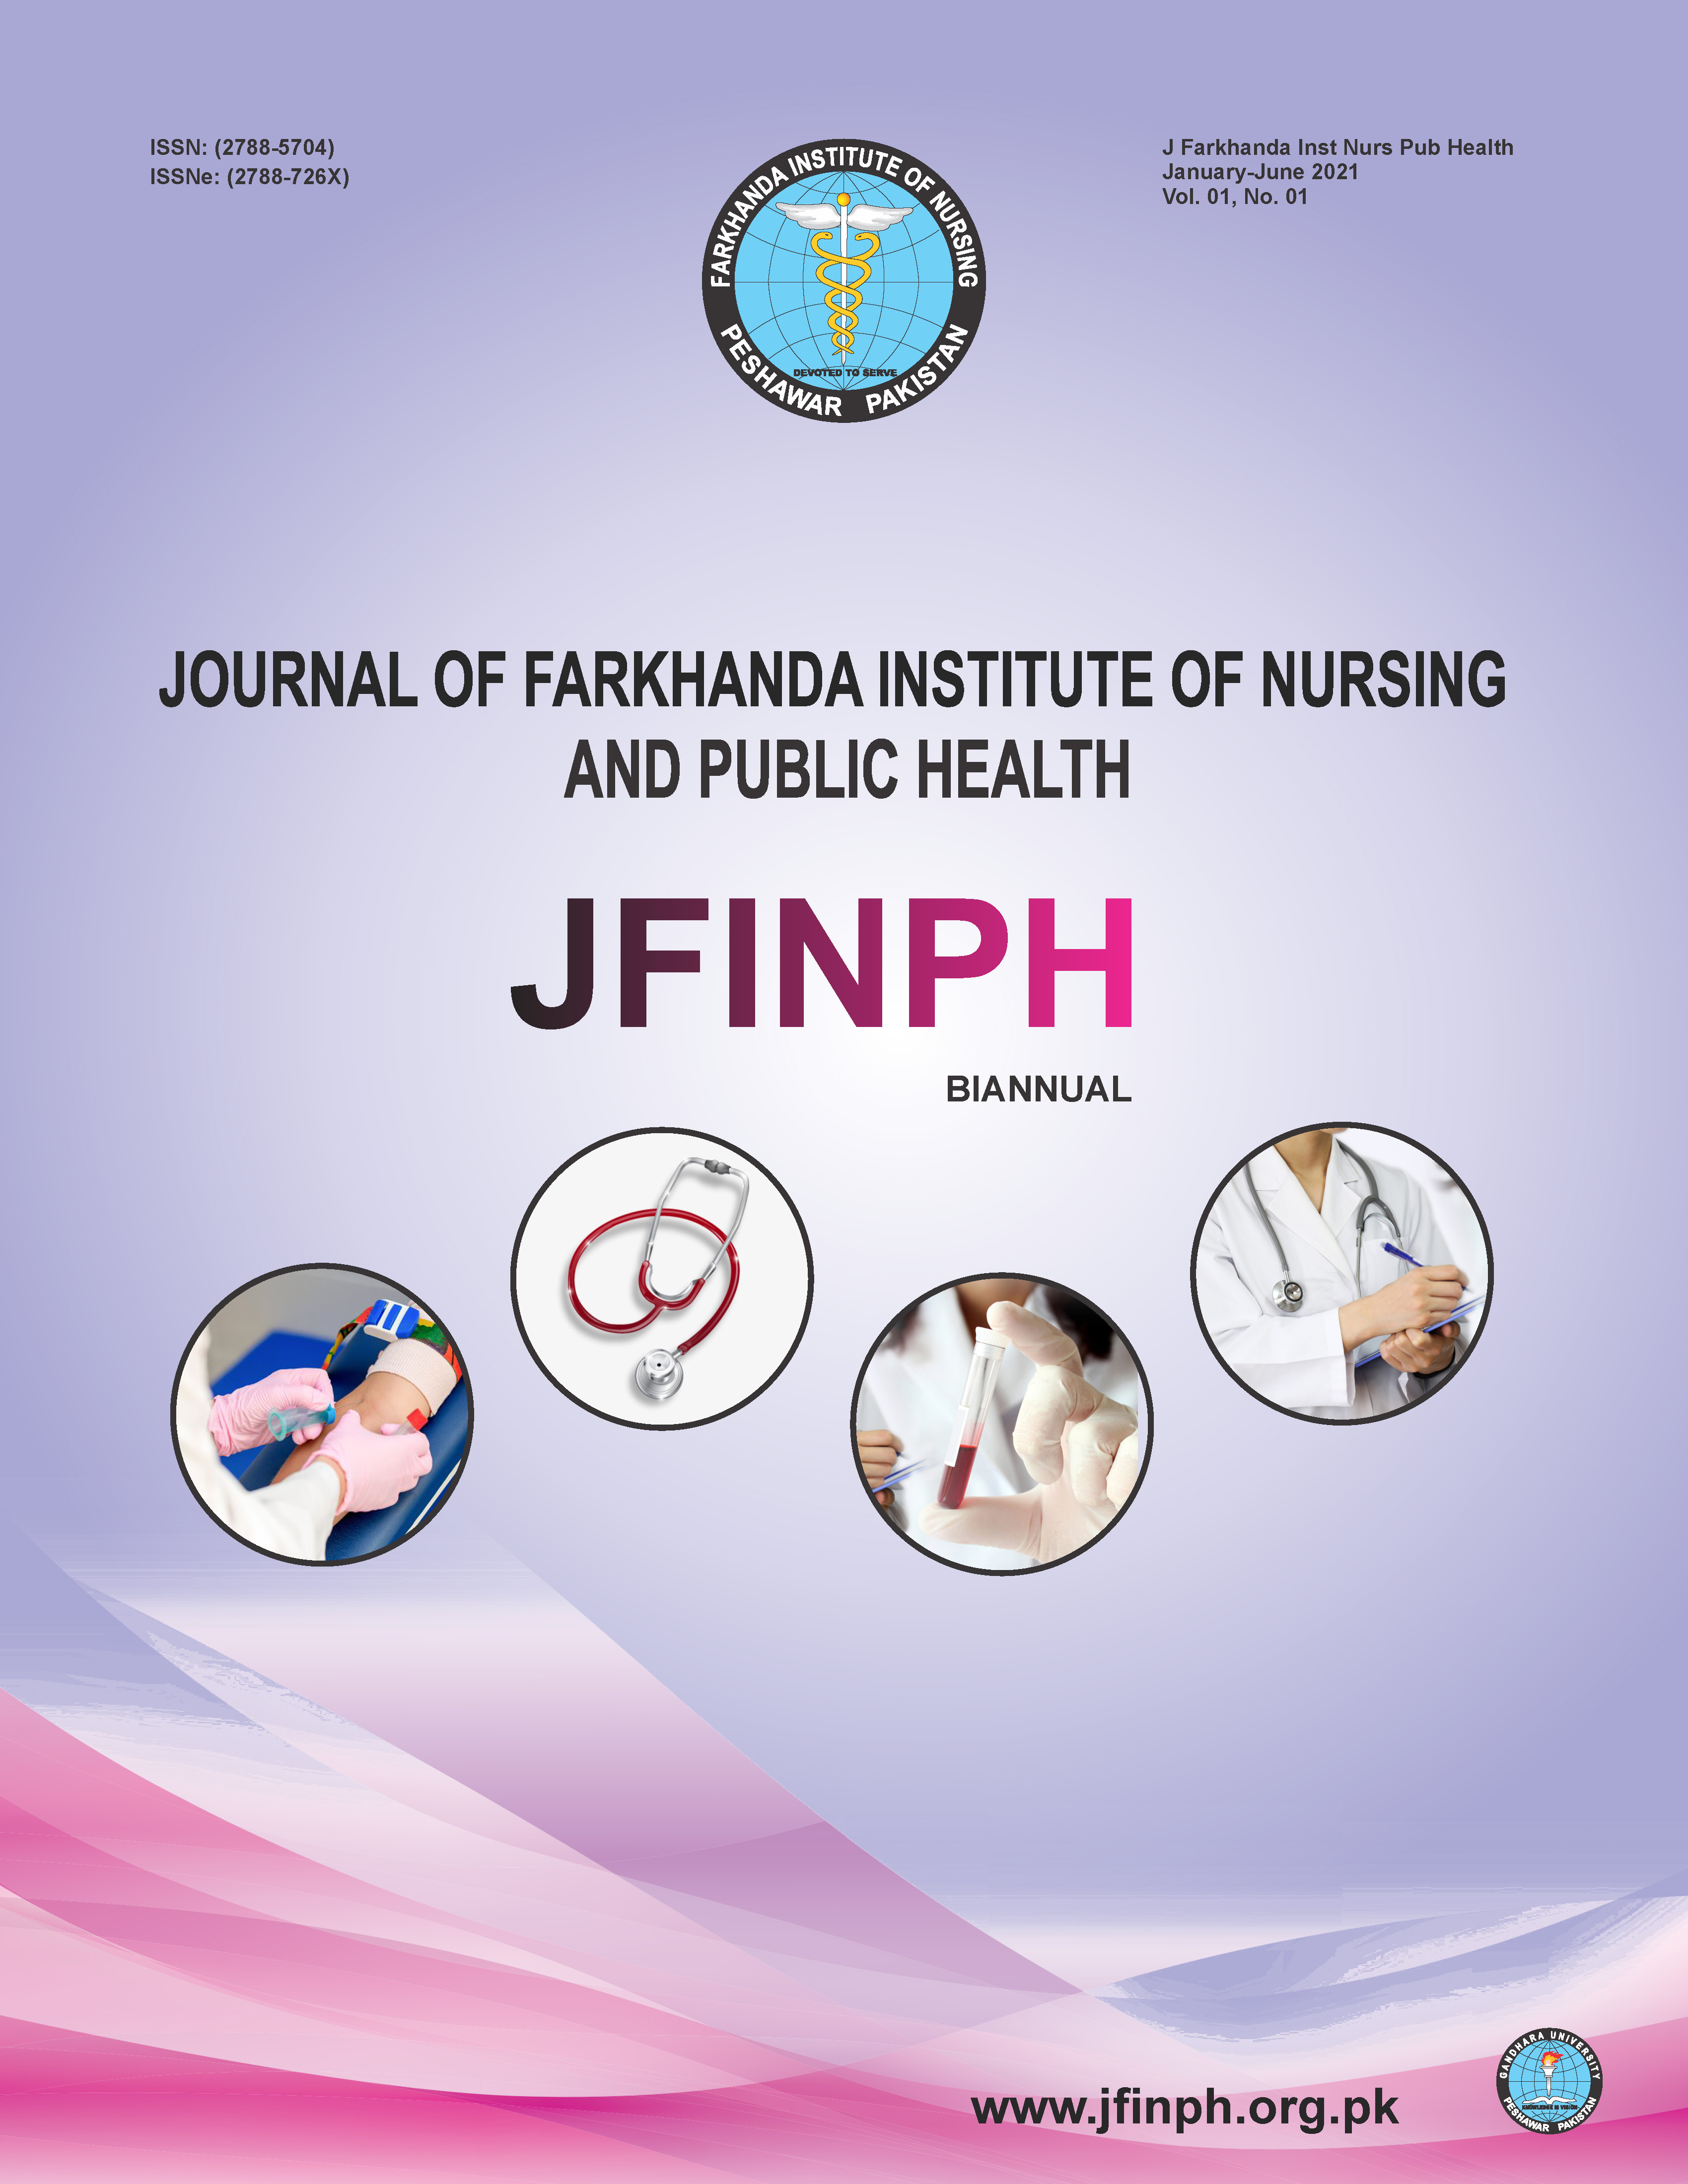 					View Vol. 1 No. 01 (2021): JFINPH (January -June 2021)
				